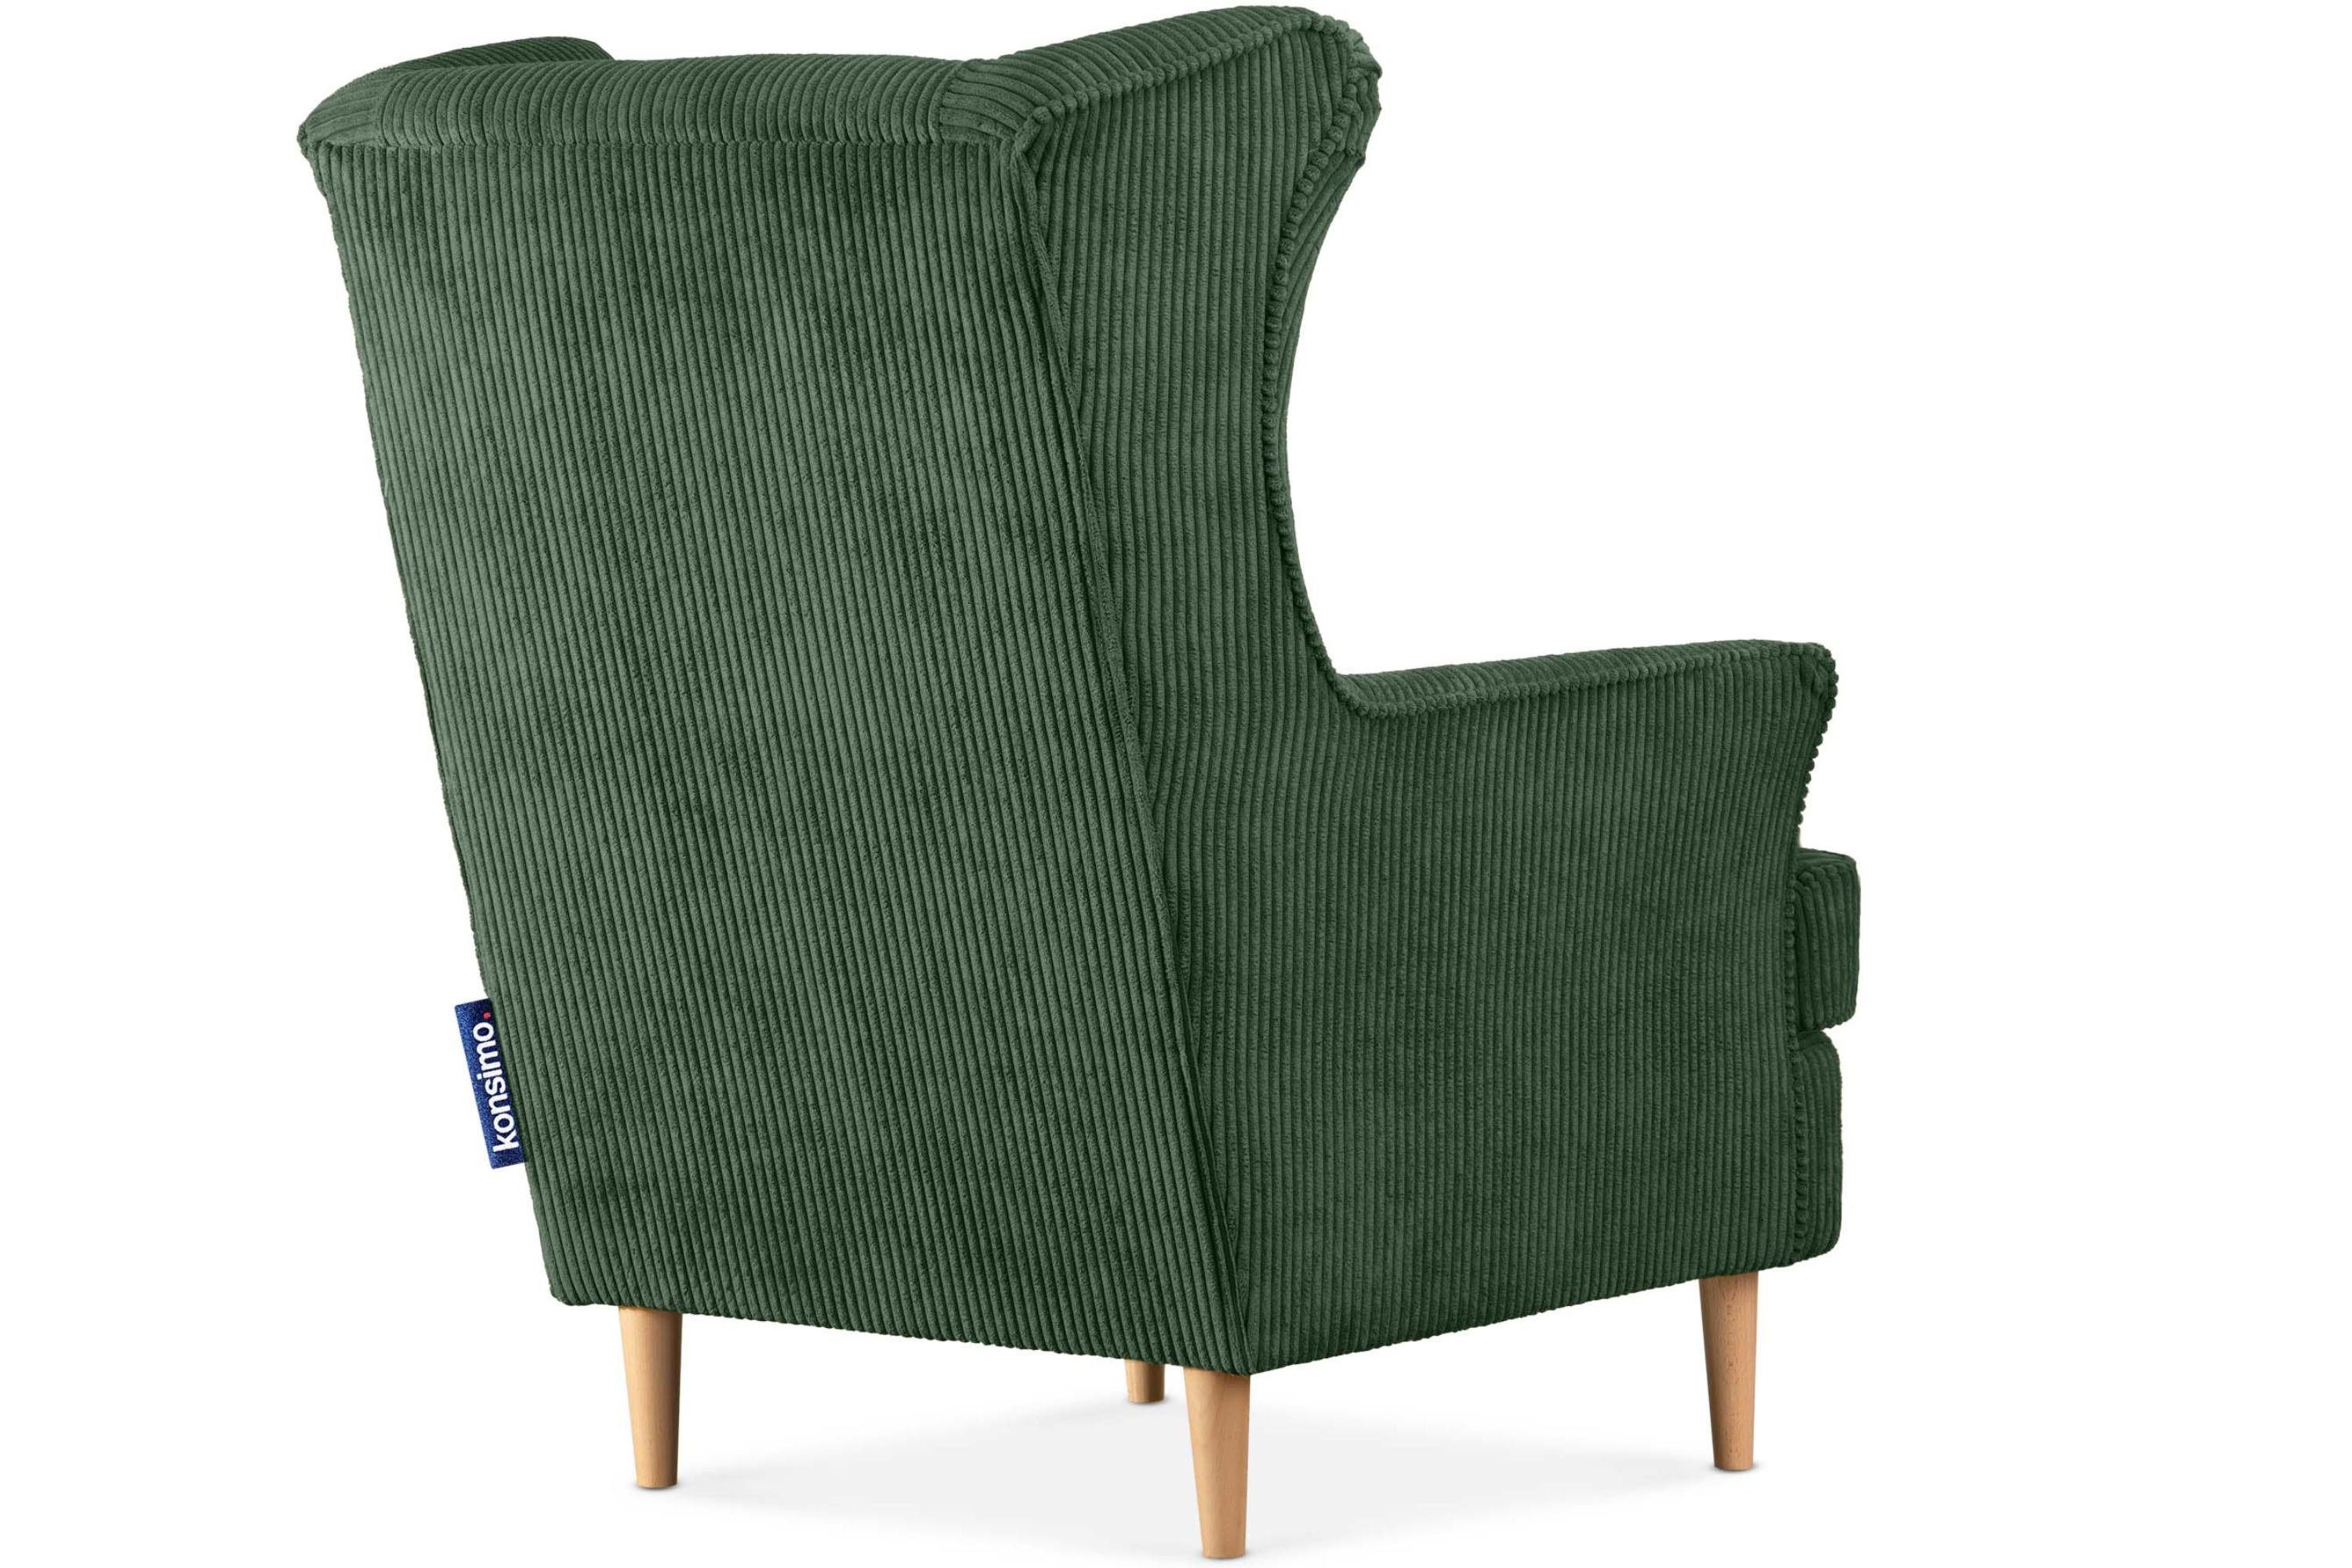 Konsimo Ohrensessel Sessel, Design, STRALIS dekorativem zeitloses Füße, hohe inklusive Kissen